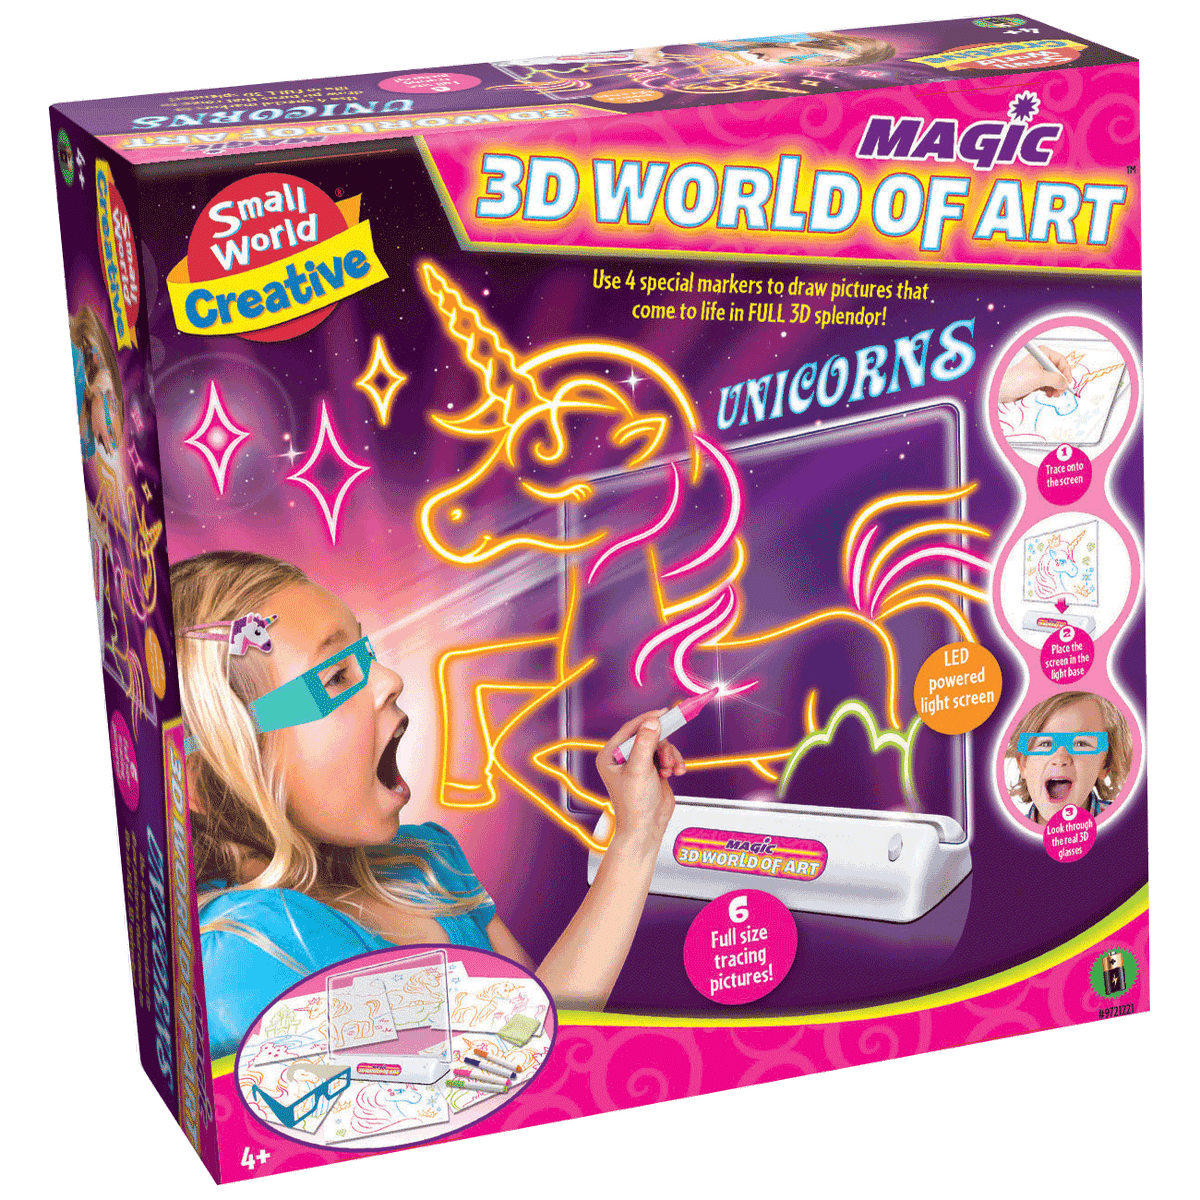 Magic 3D World of Art - Small World Creative - Toybox Tales